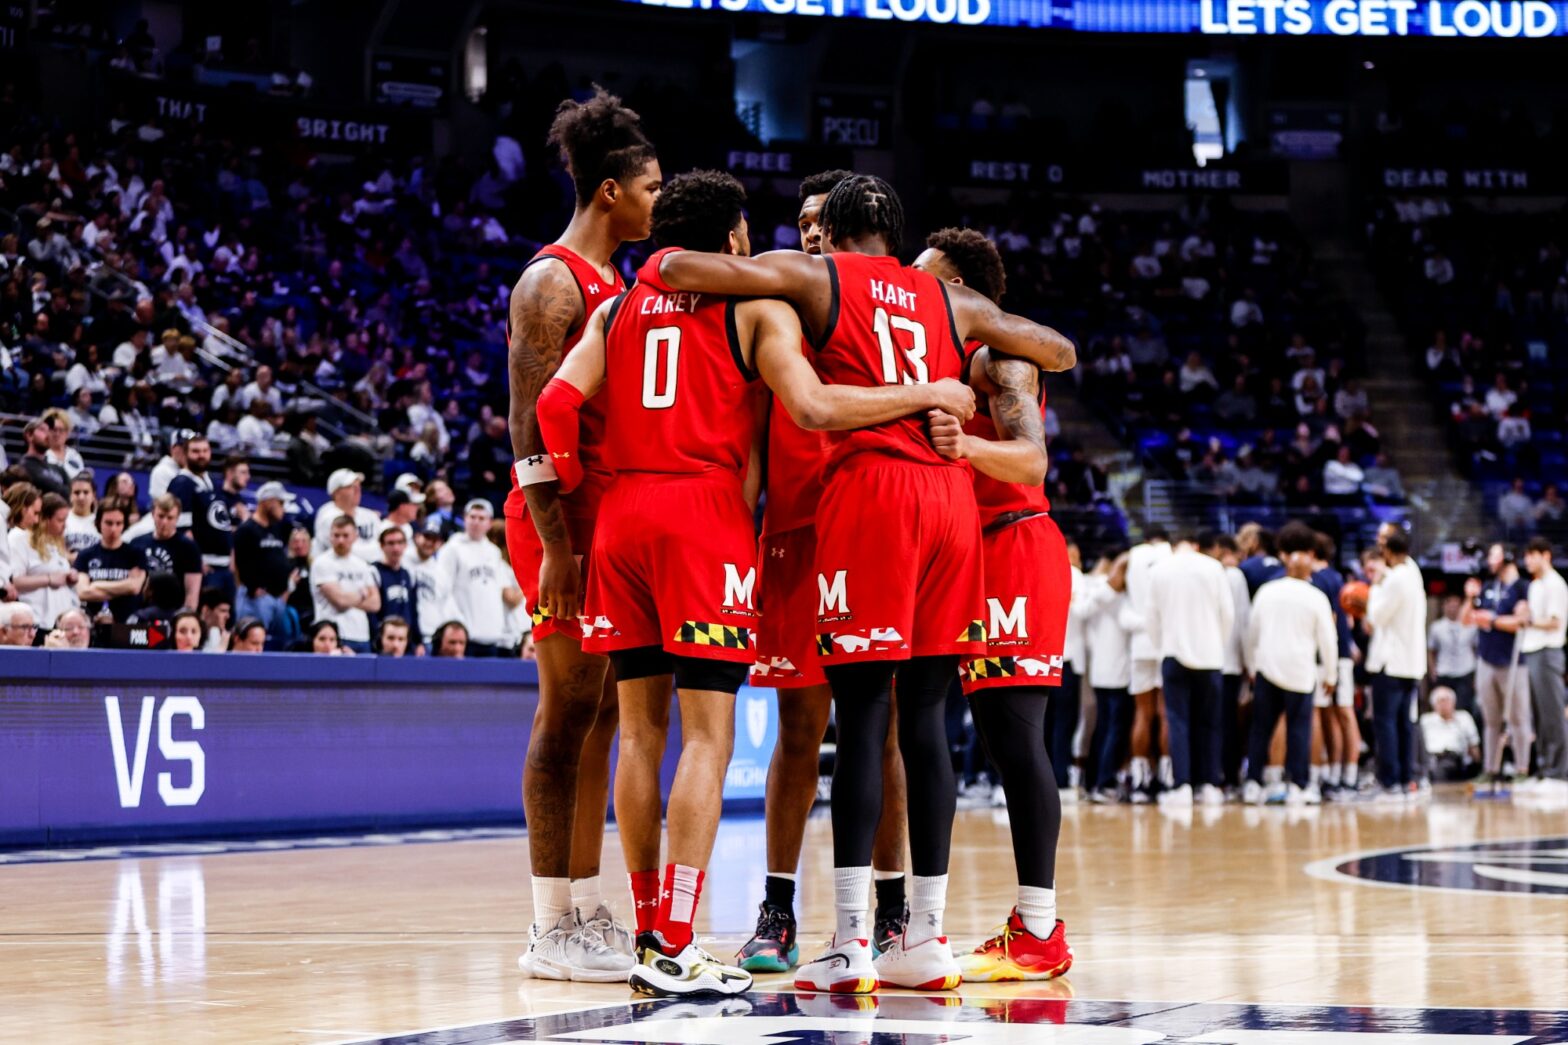 Maryland basketball players huddle on the court vs. Penn State